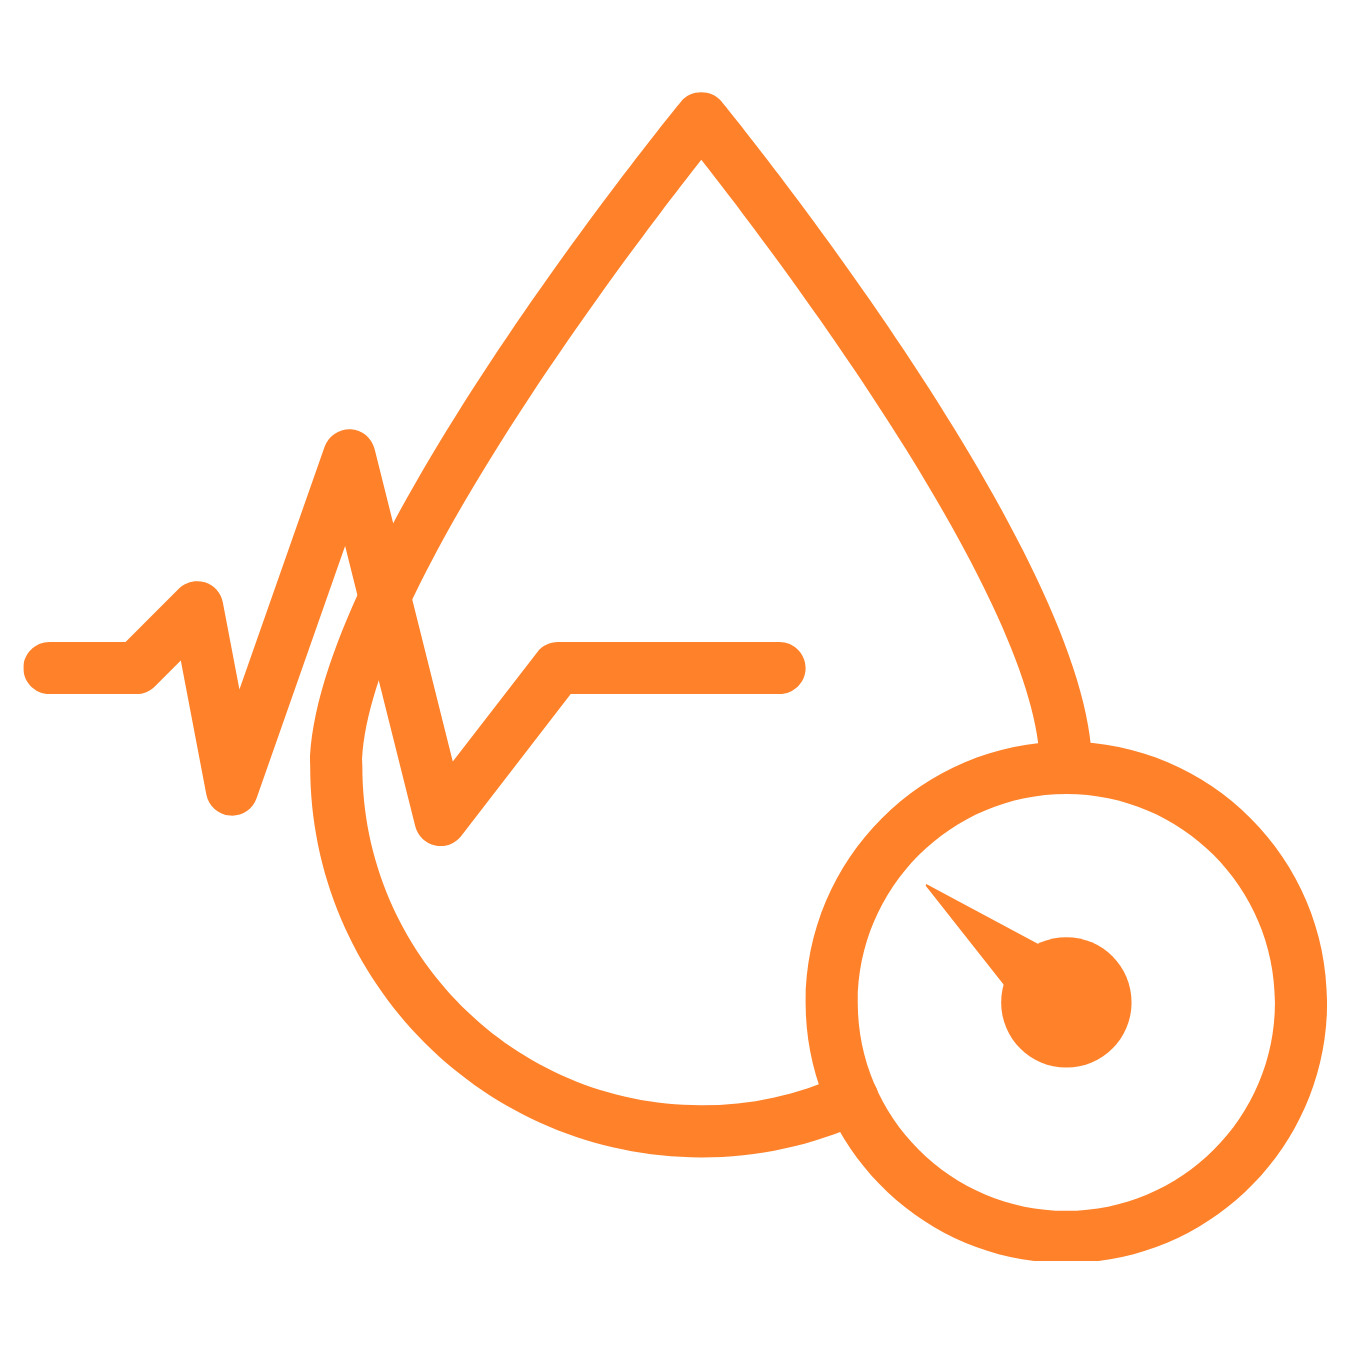 Orange colored icon depicting blood pressure. 